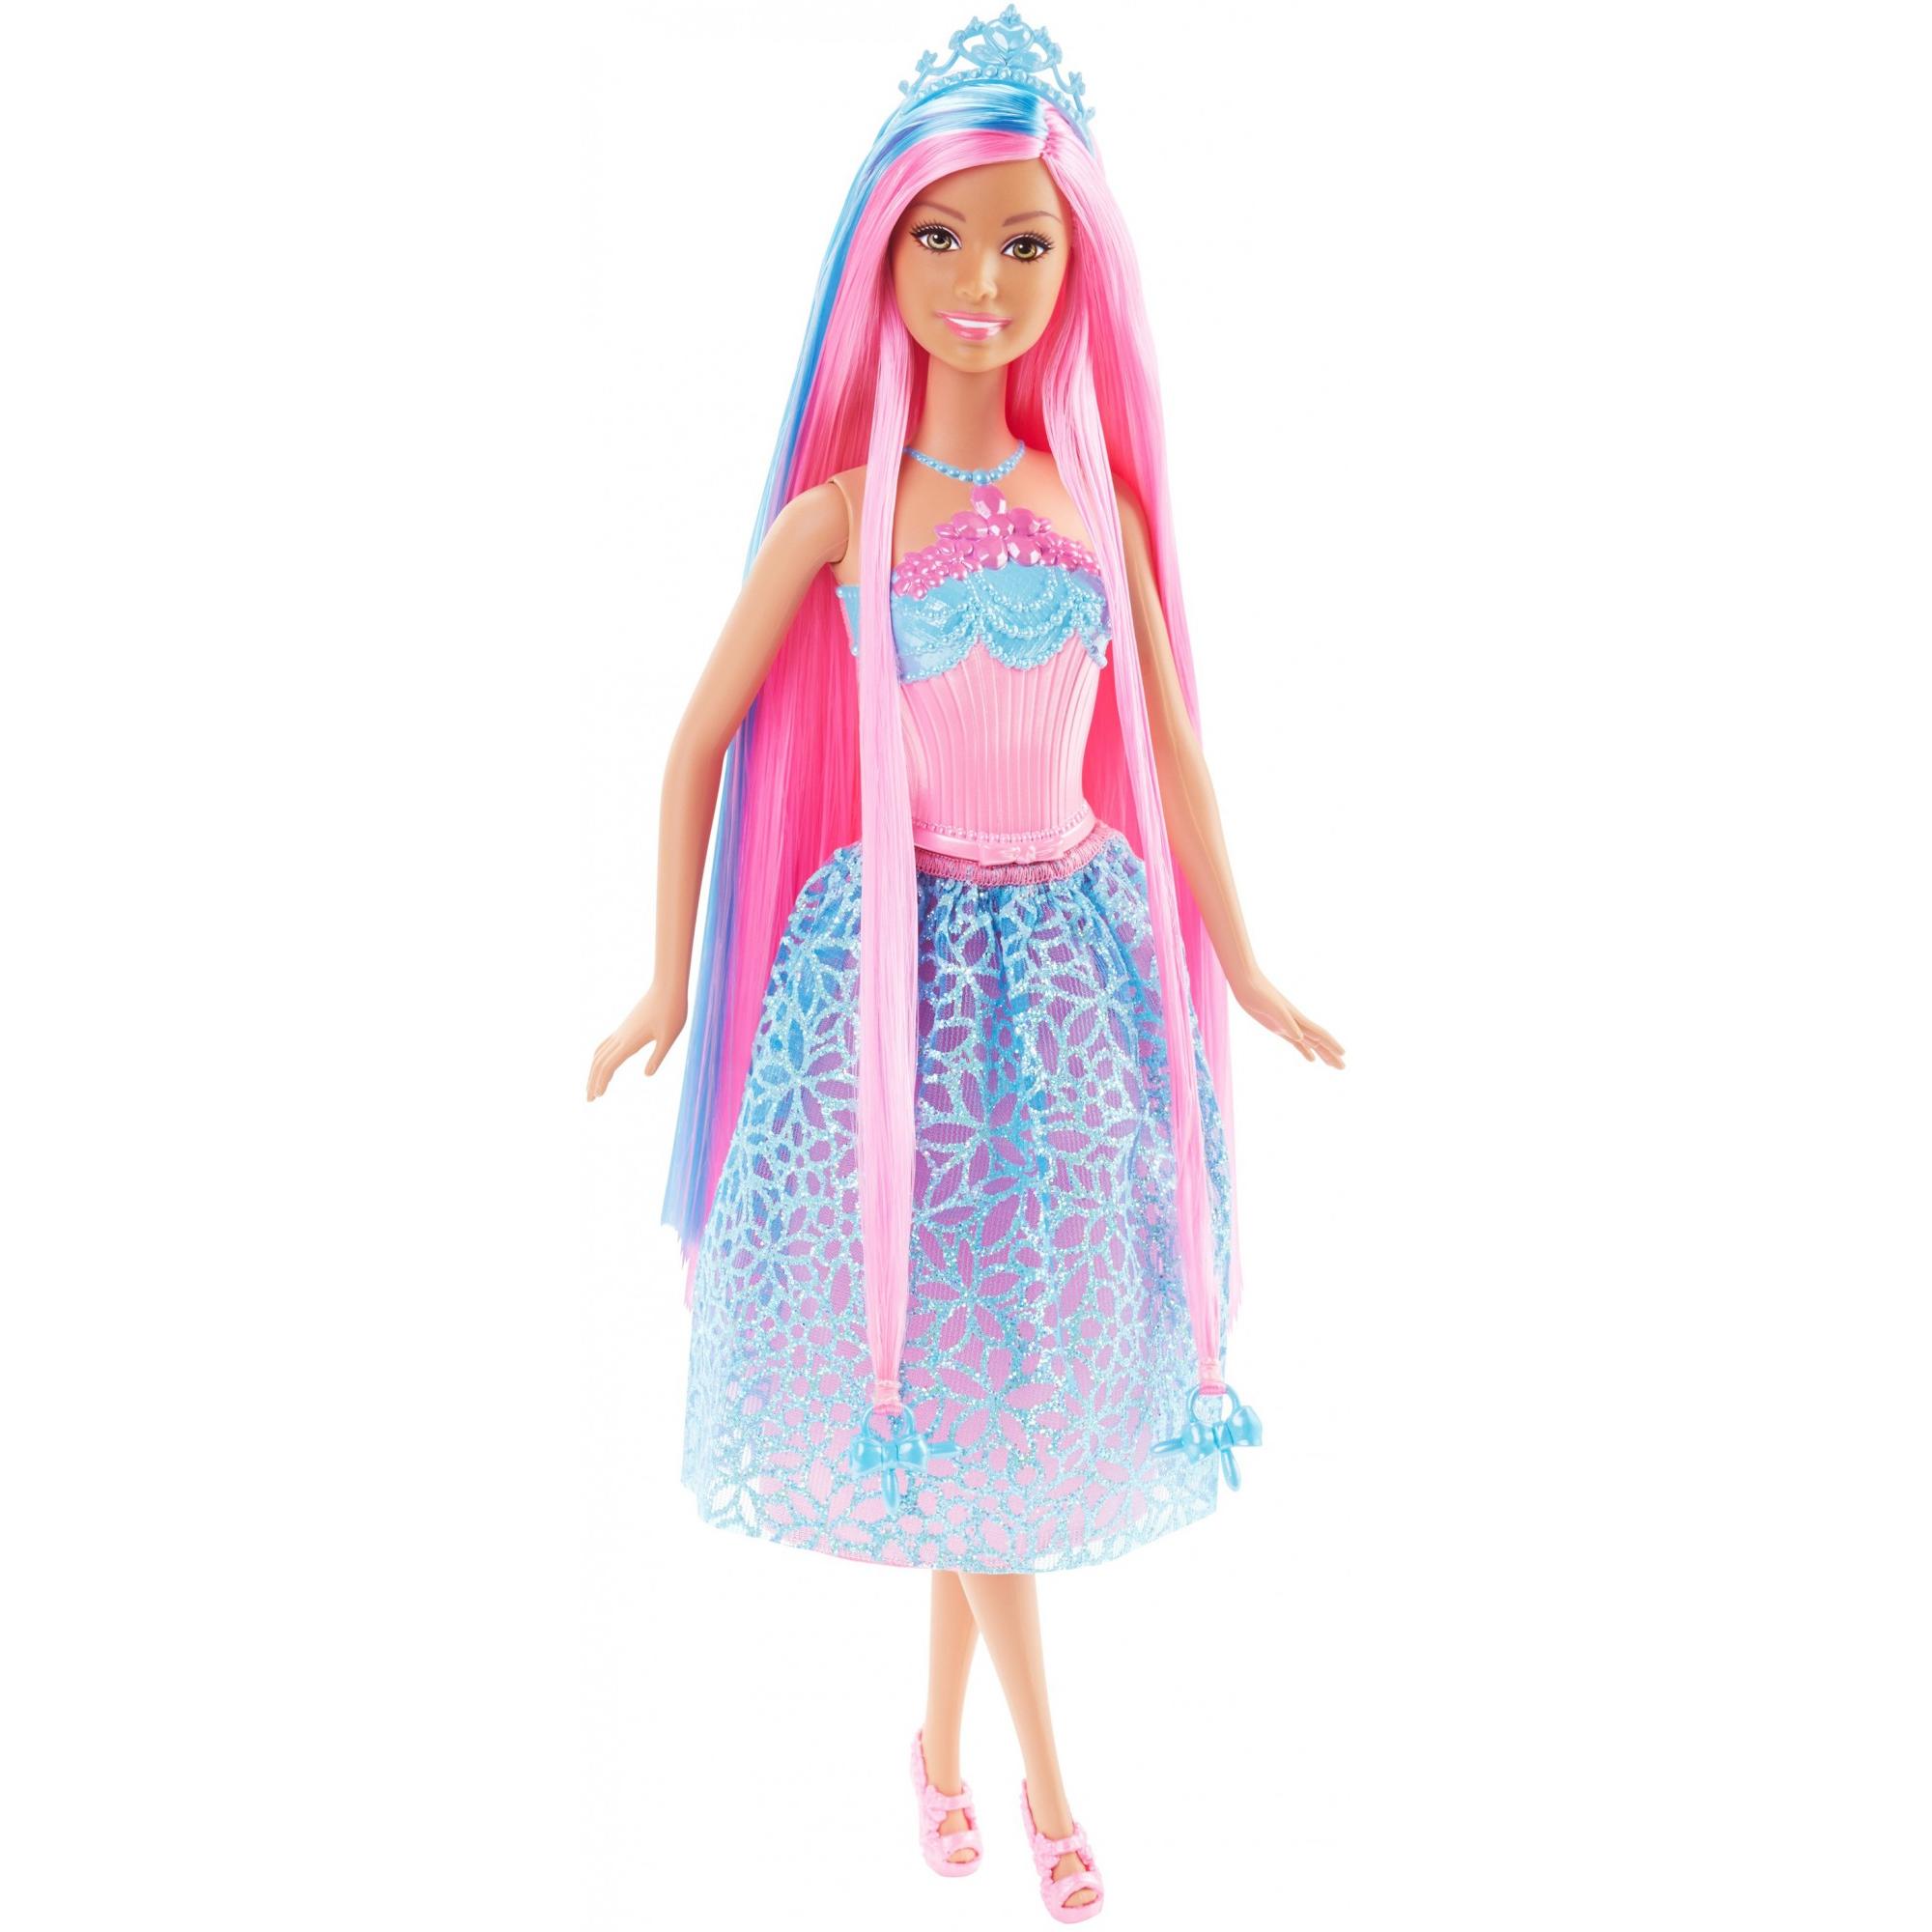 Barbie Endless Hair Kingdom Princess Doll Blue - image 3 of 7